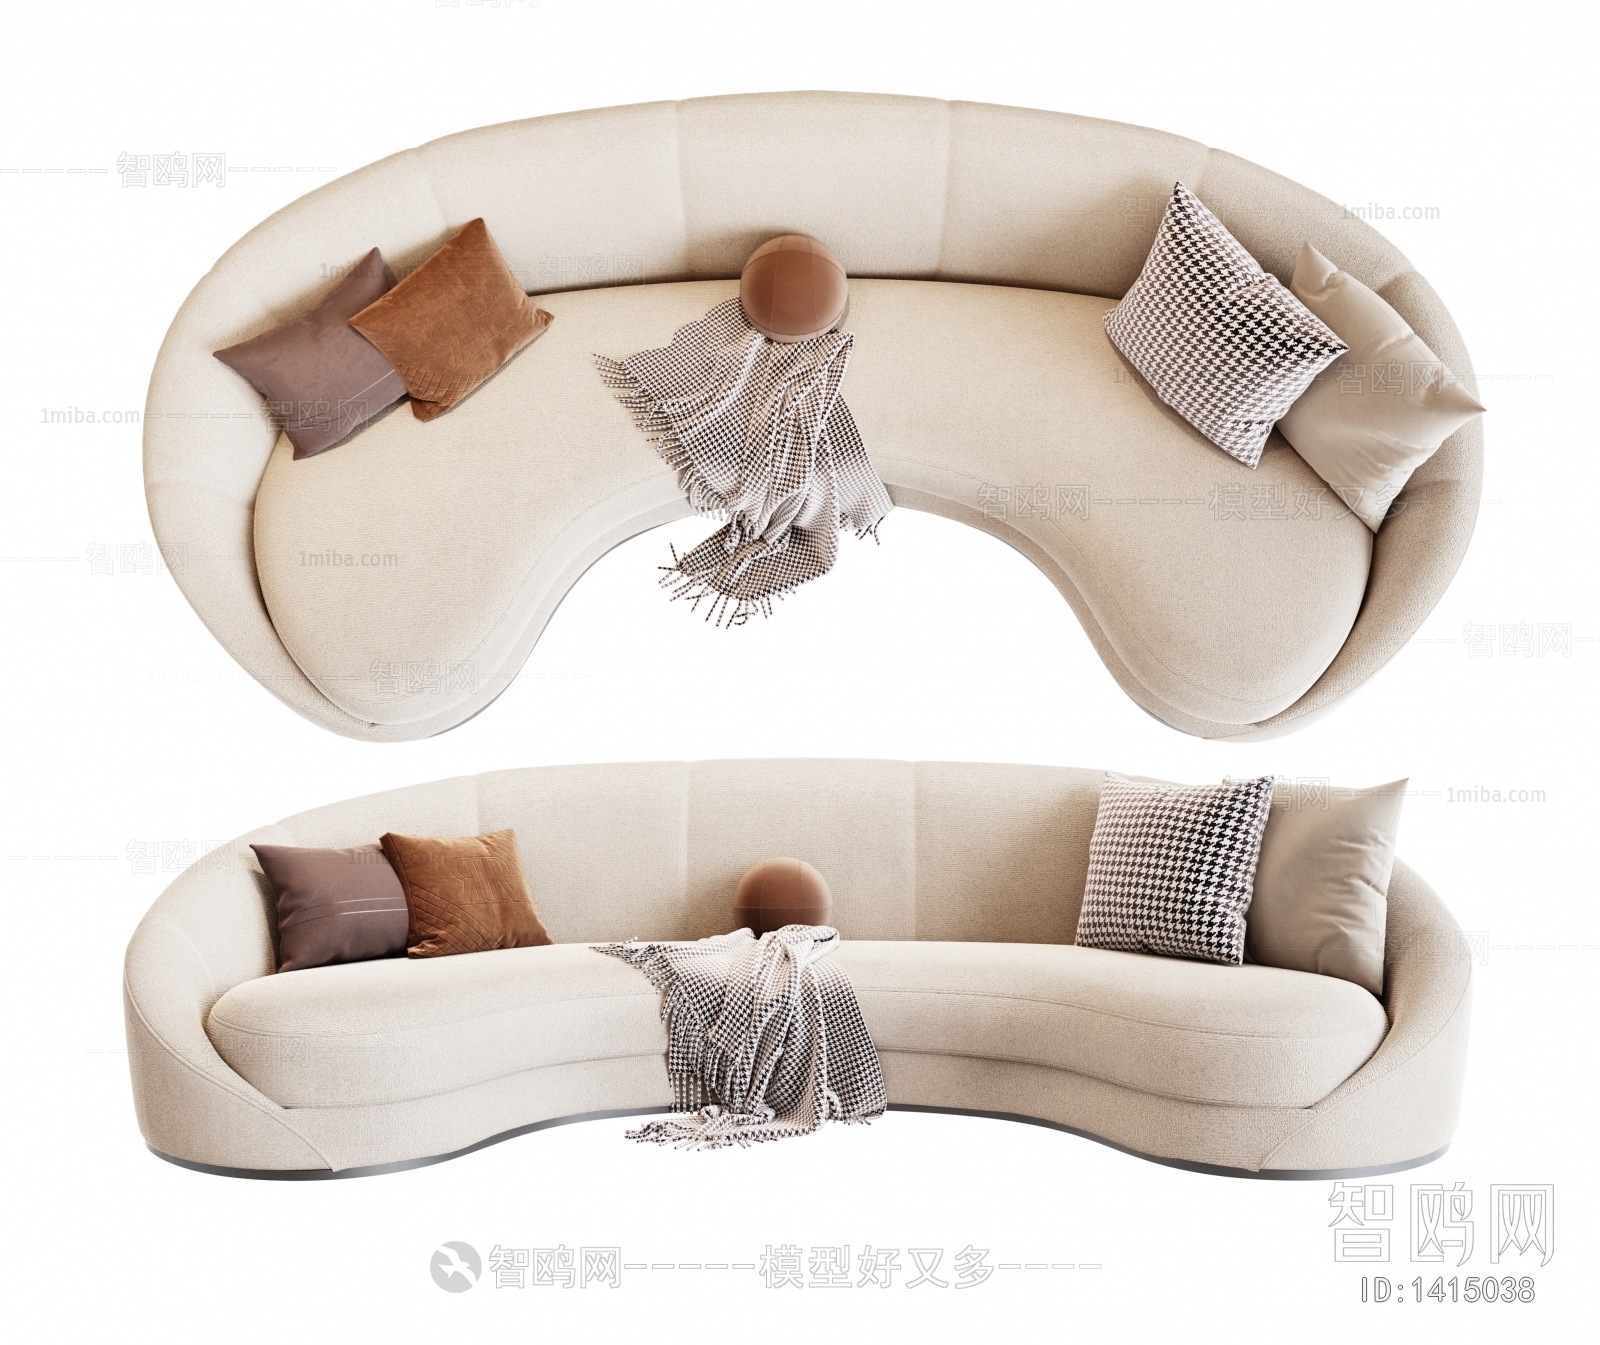 Poliform 现代弧形多人沙发